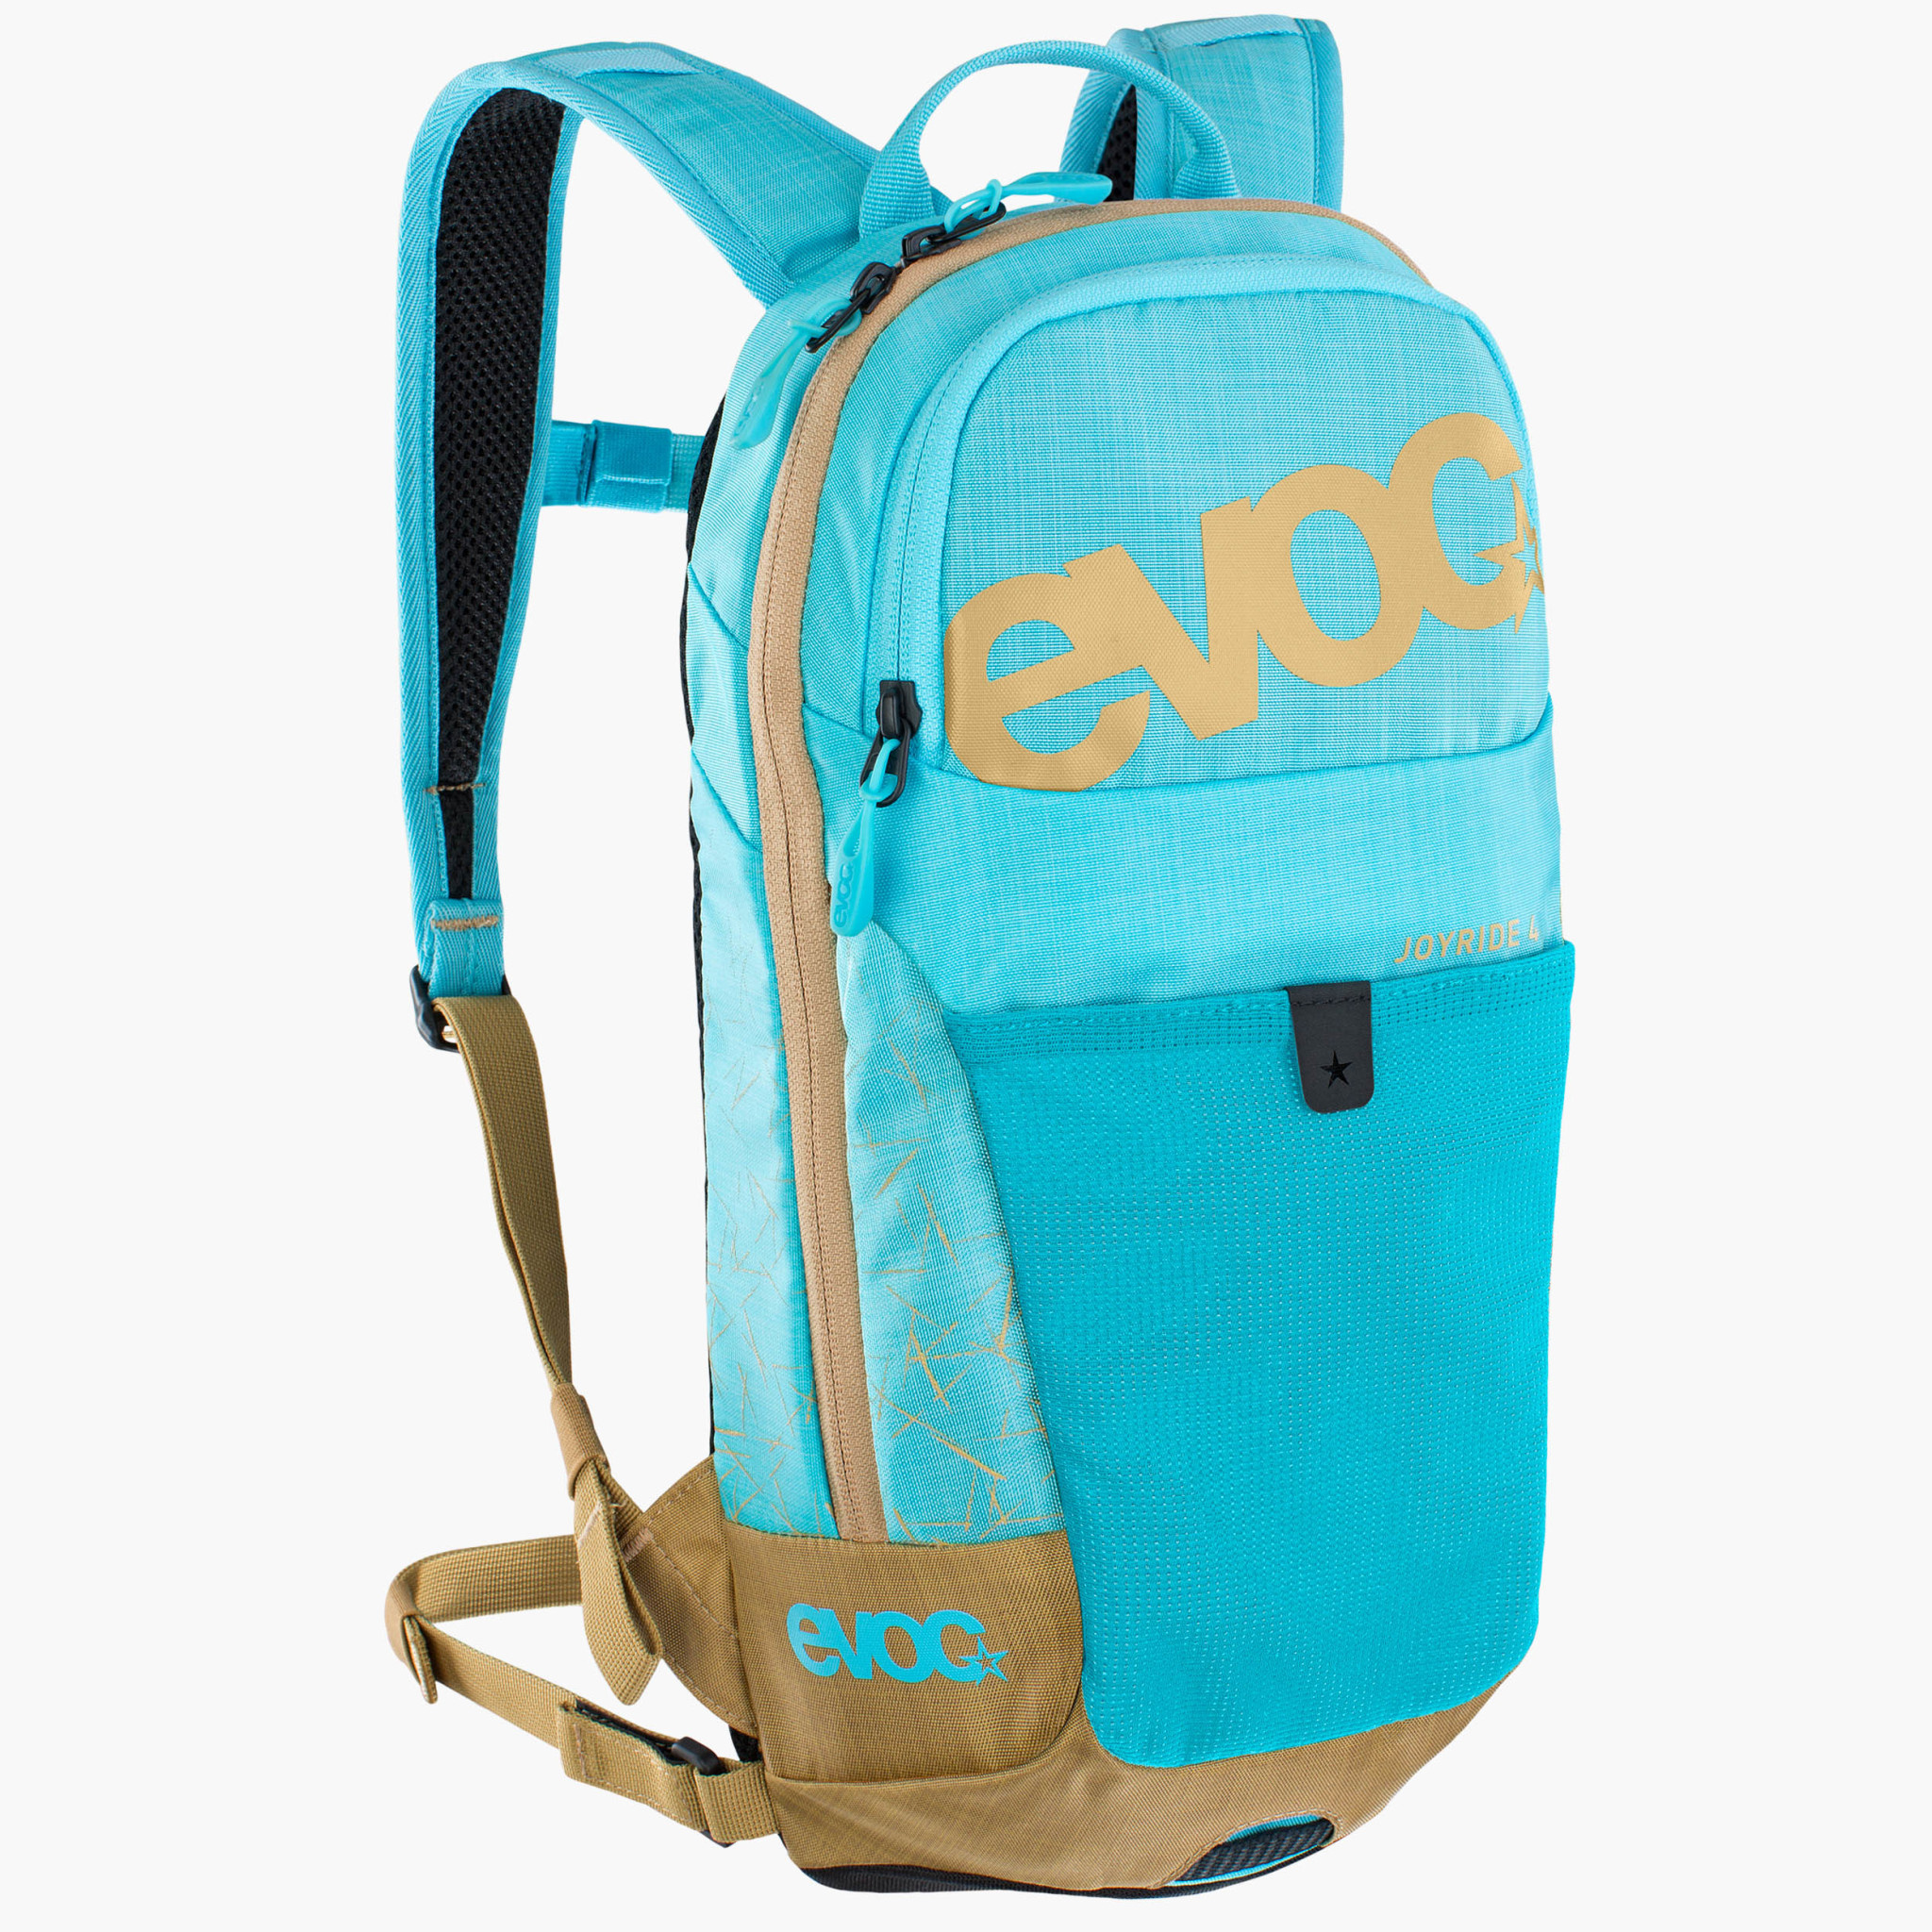 Evoc EVOC, Joyride 4, Hydration Bag, Volume: 4L, Neon Blue/Gold